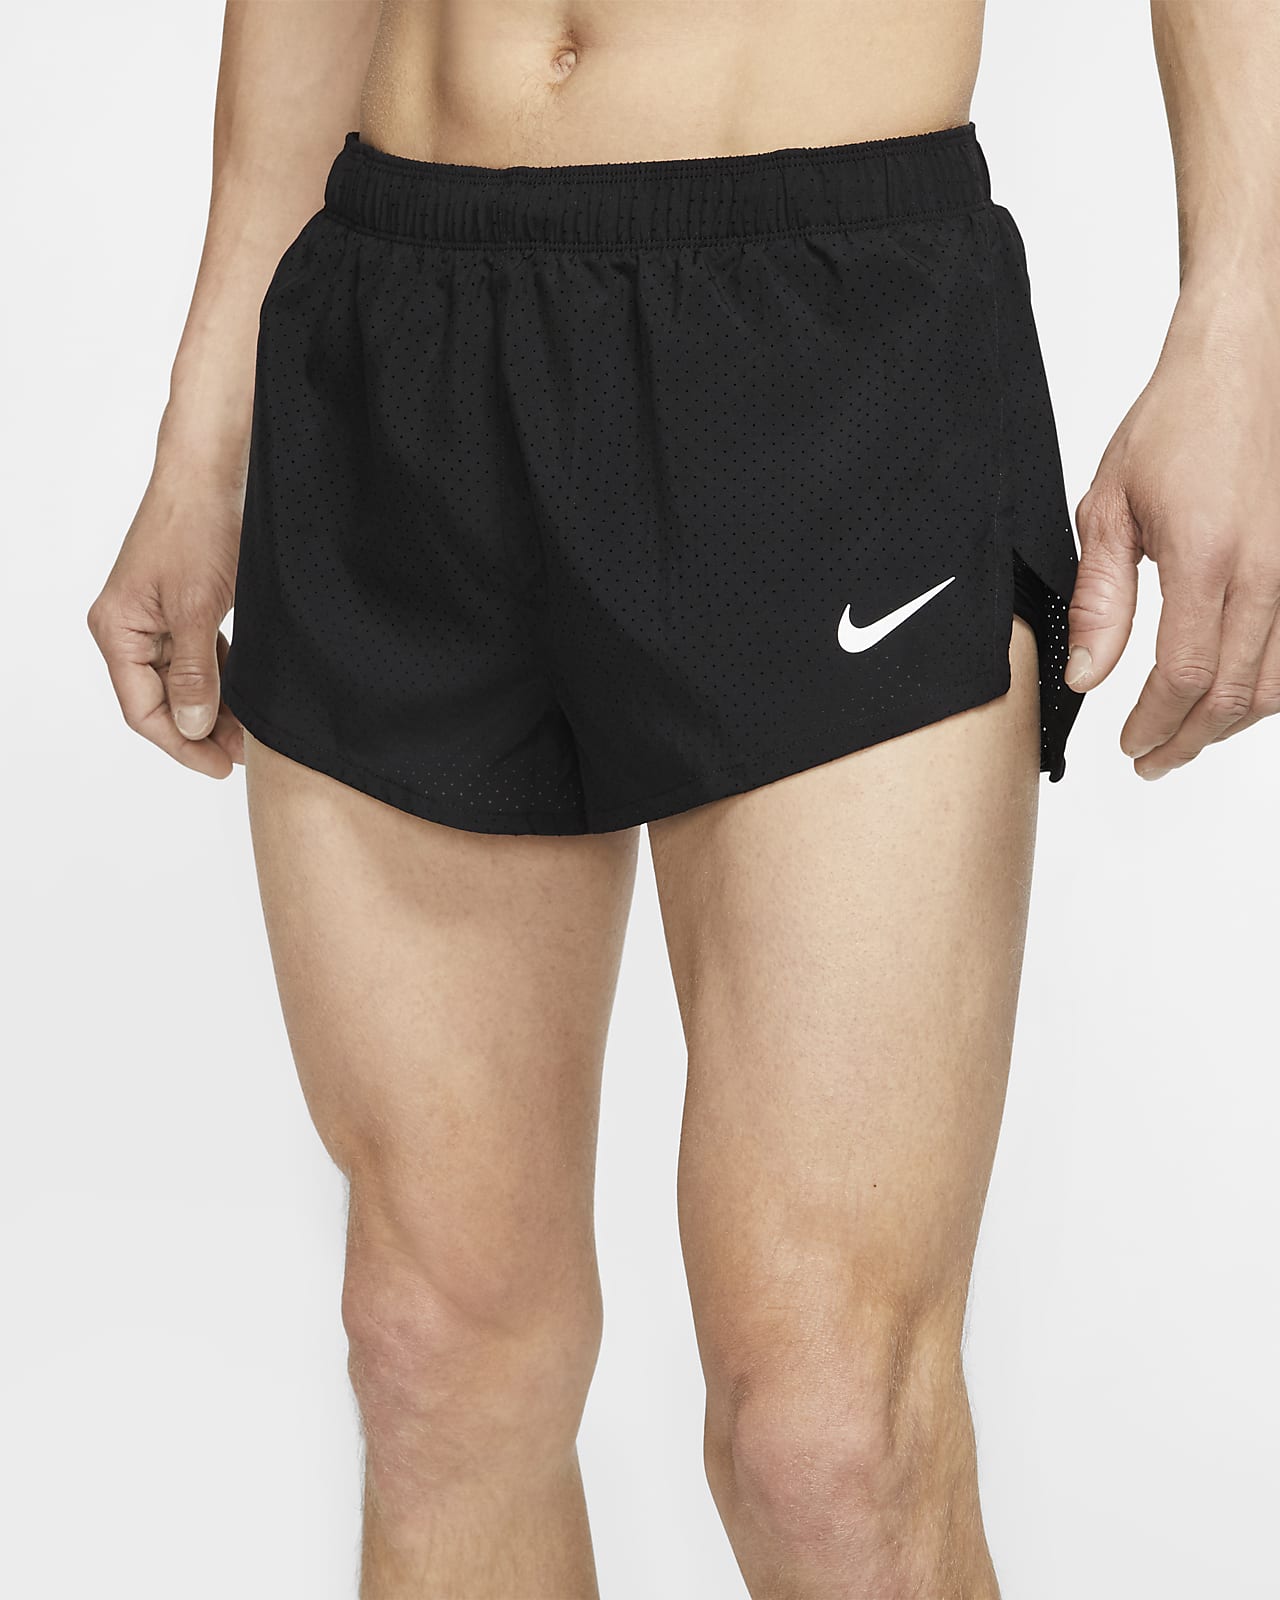 Nike Running Fast shorts in black